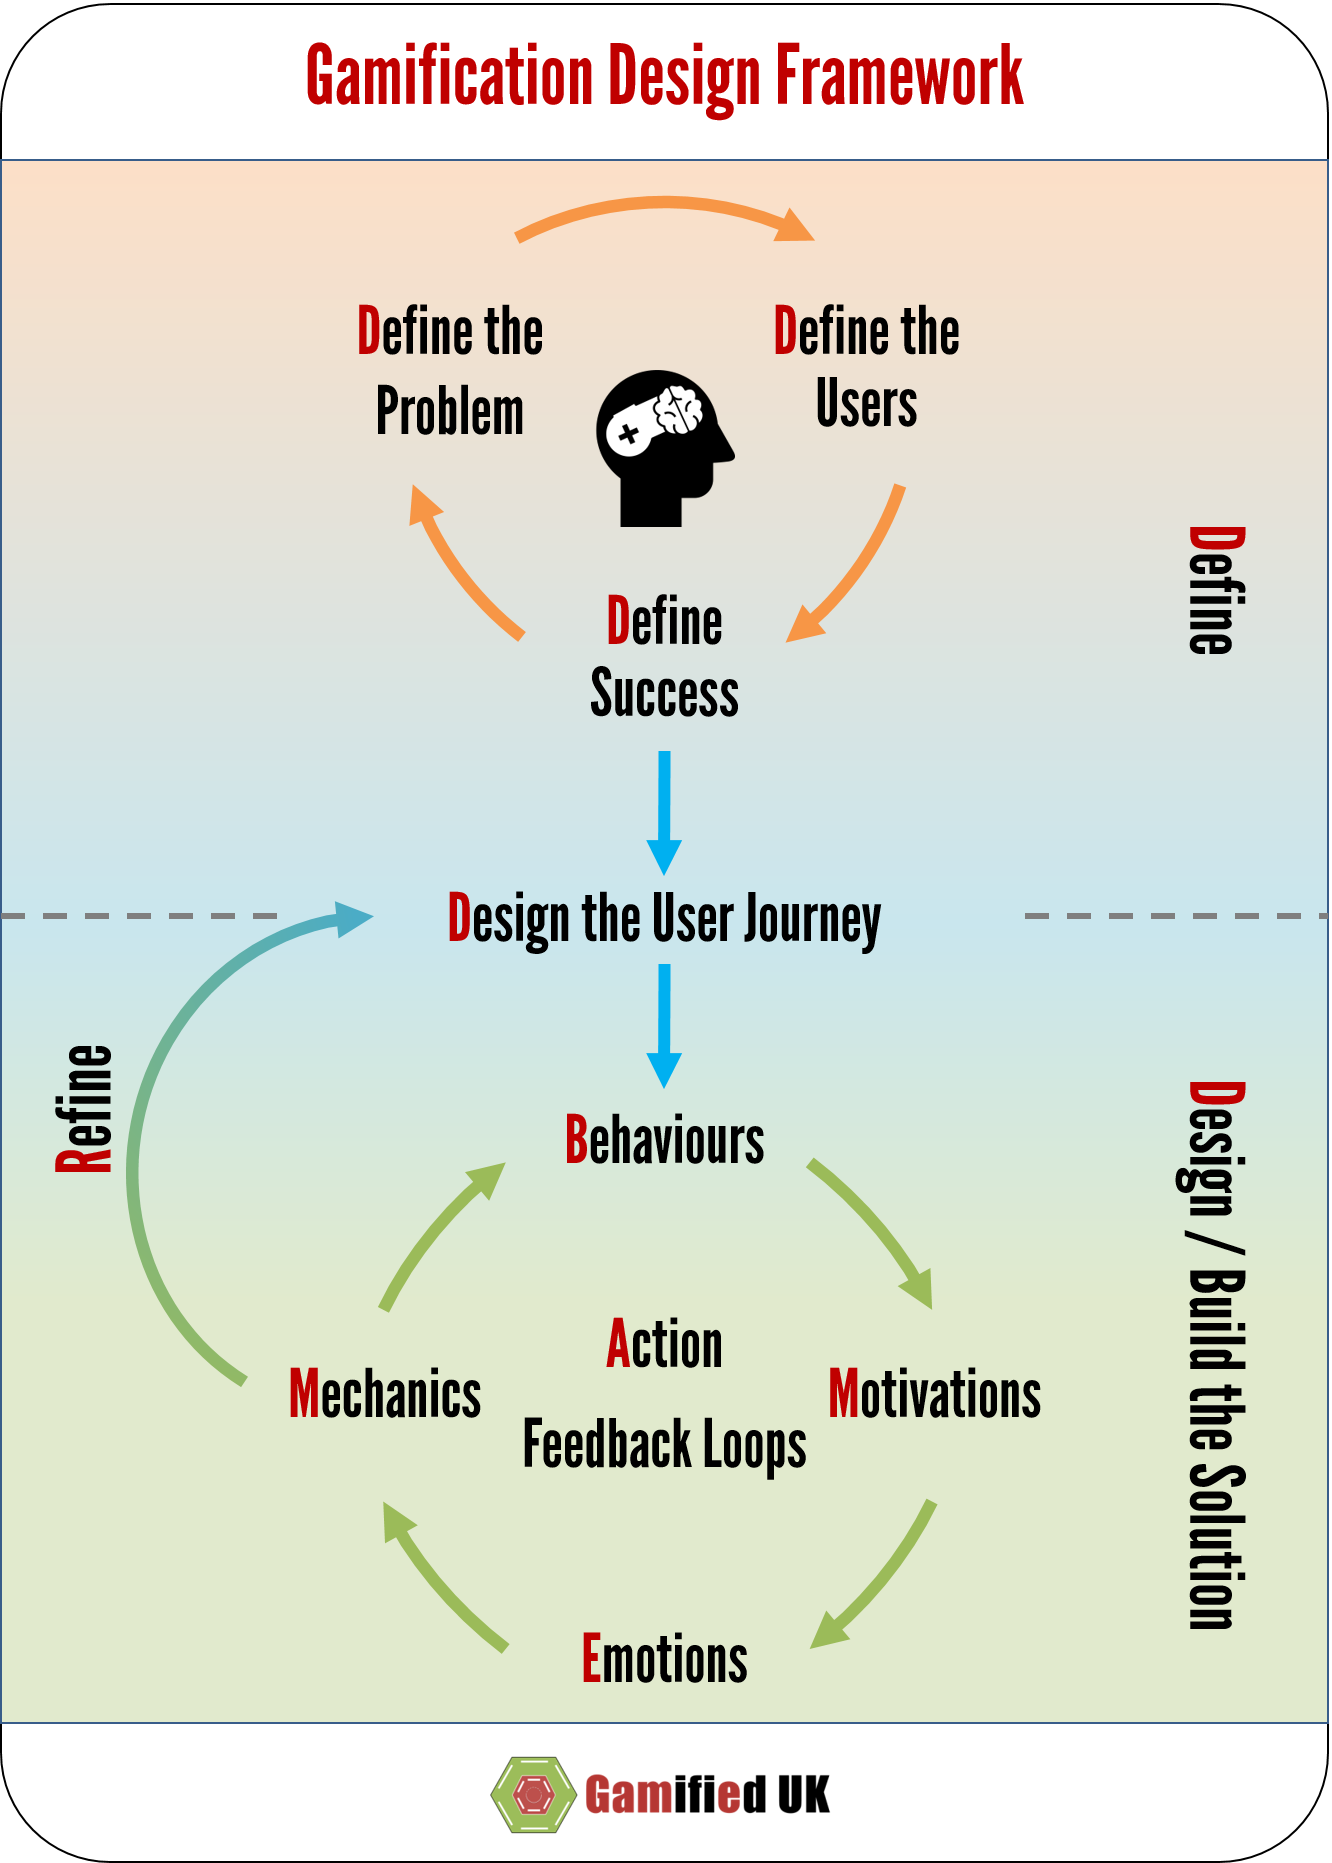 The Gamification Design Framework